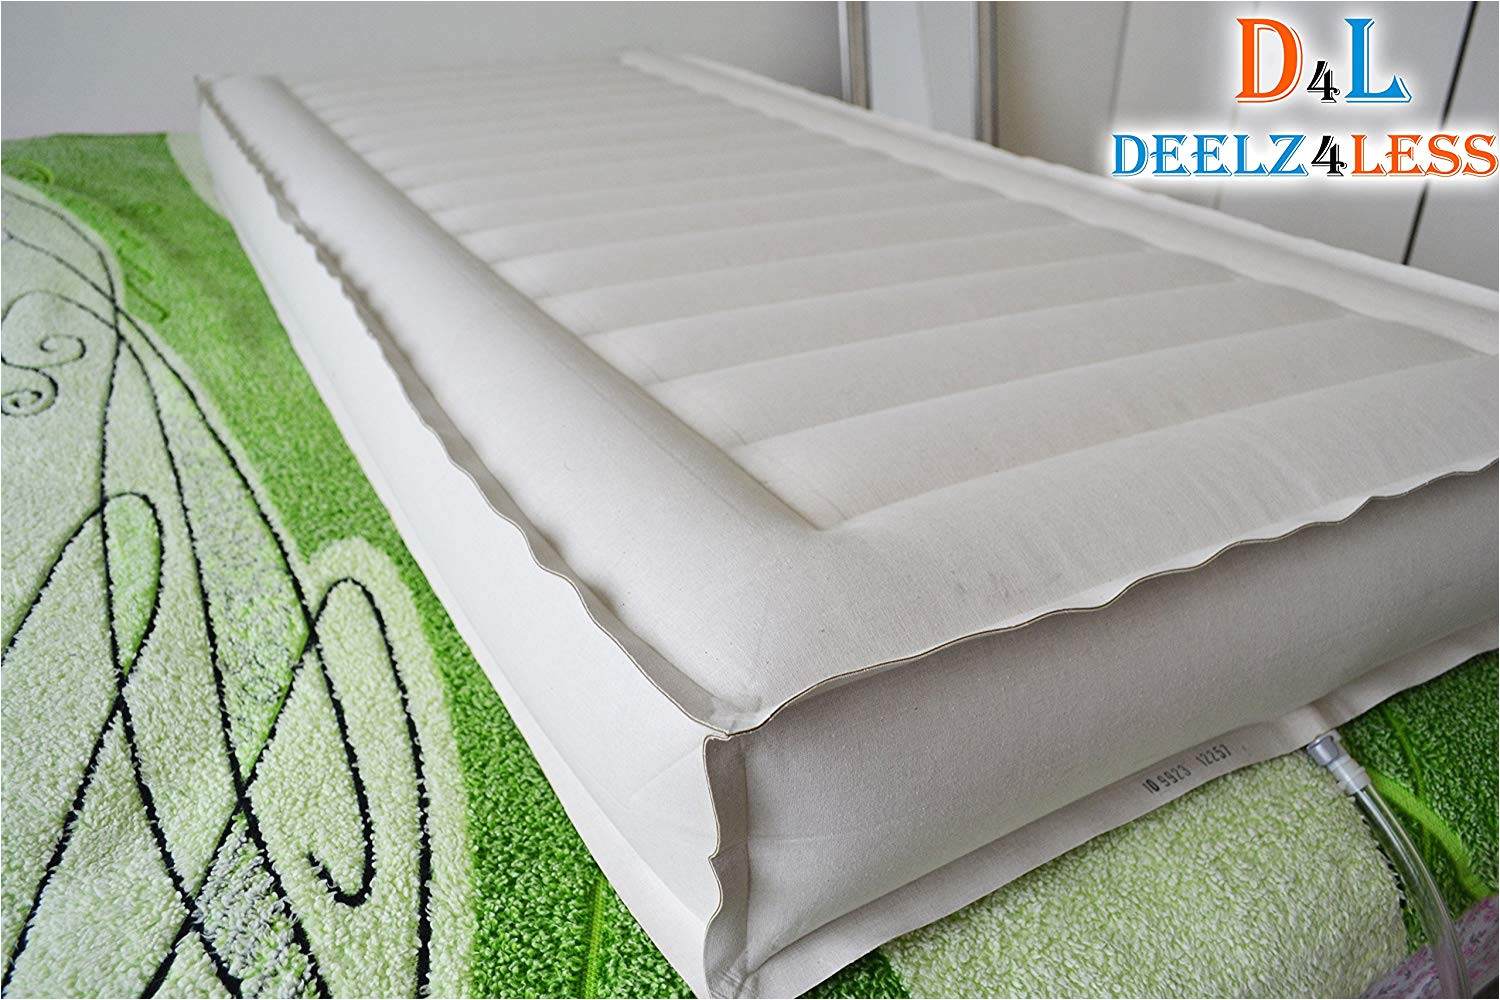 sleep number air mattress king size